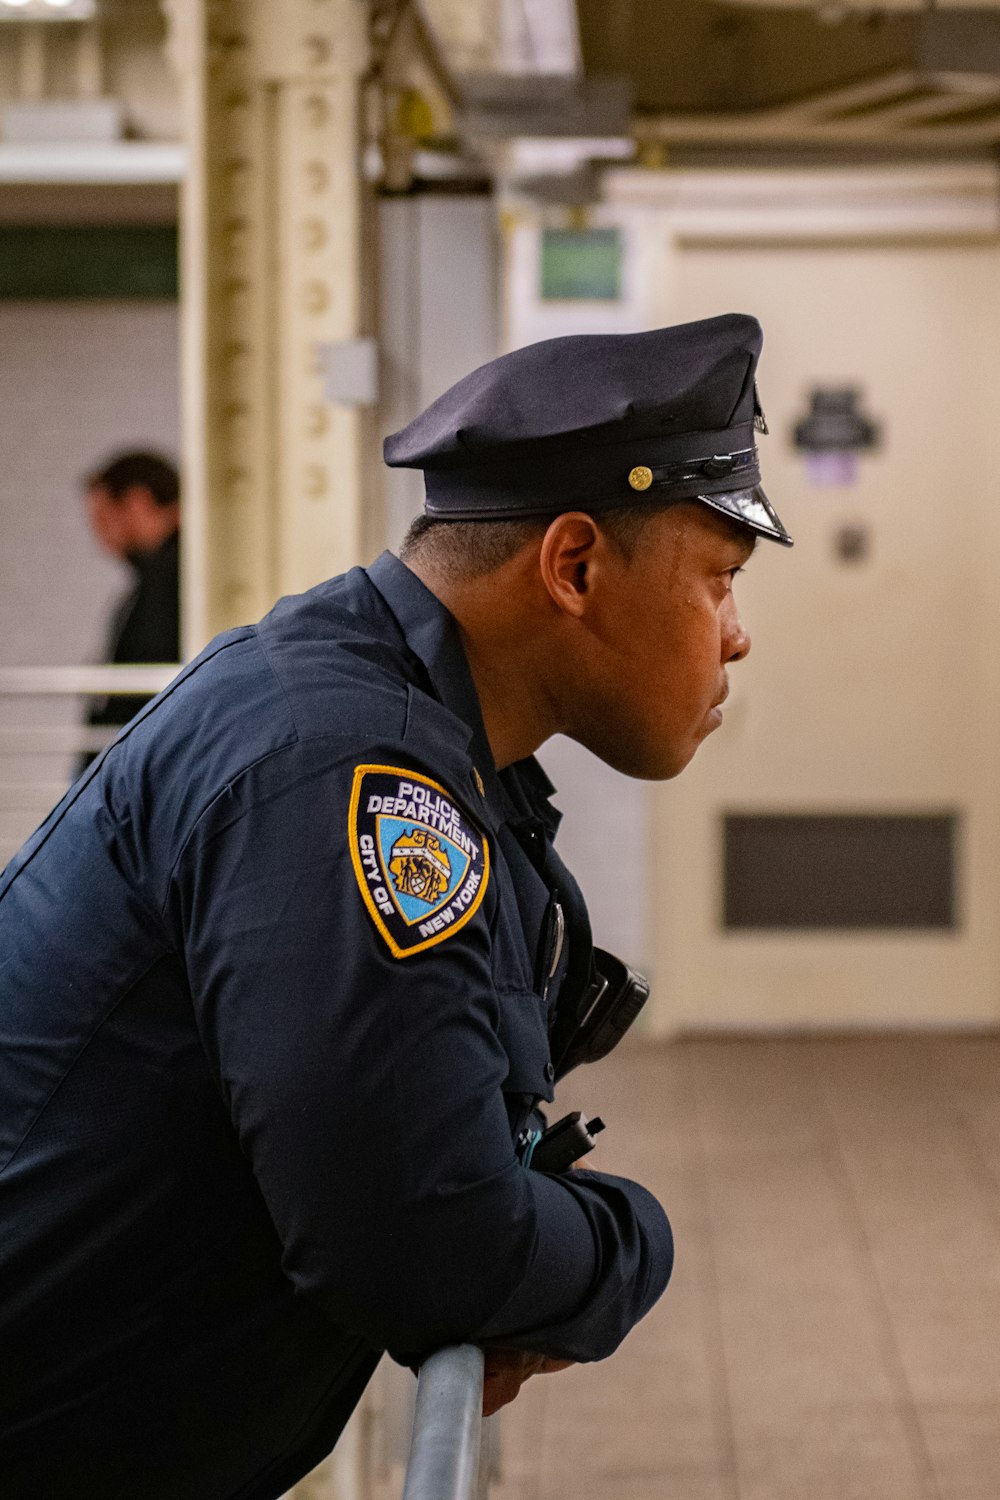 Man in blue police uniform photo – Free Nyc Image on Unsplash